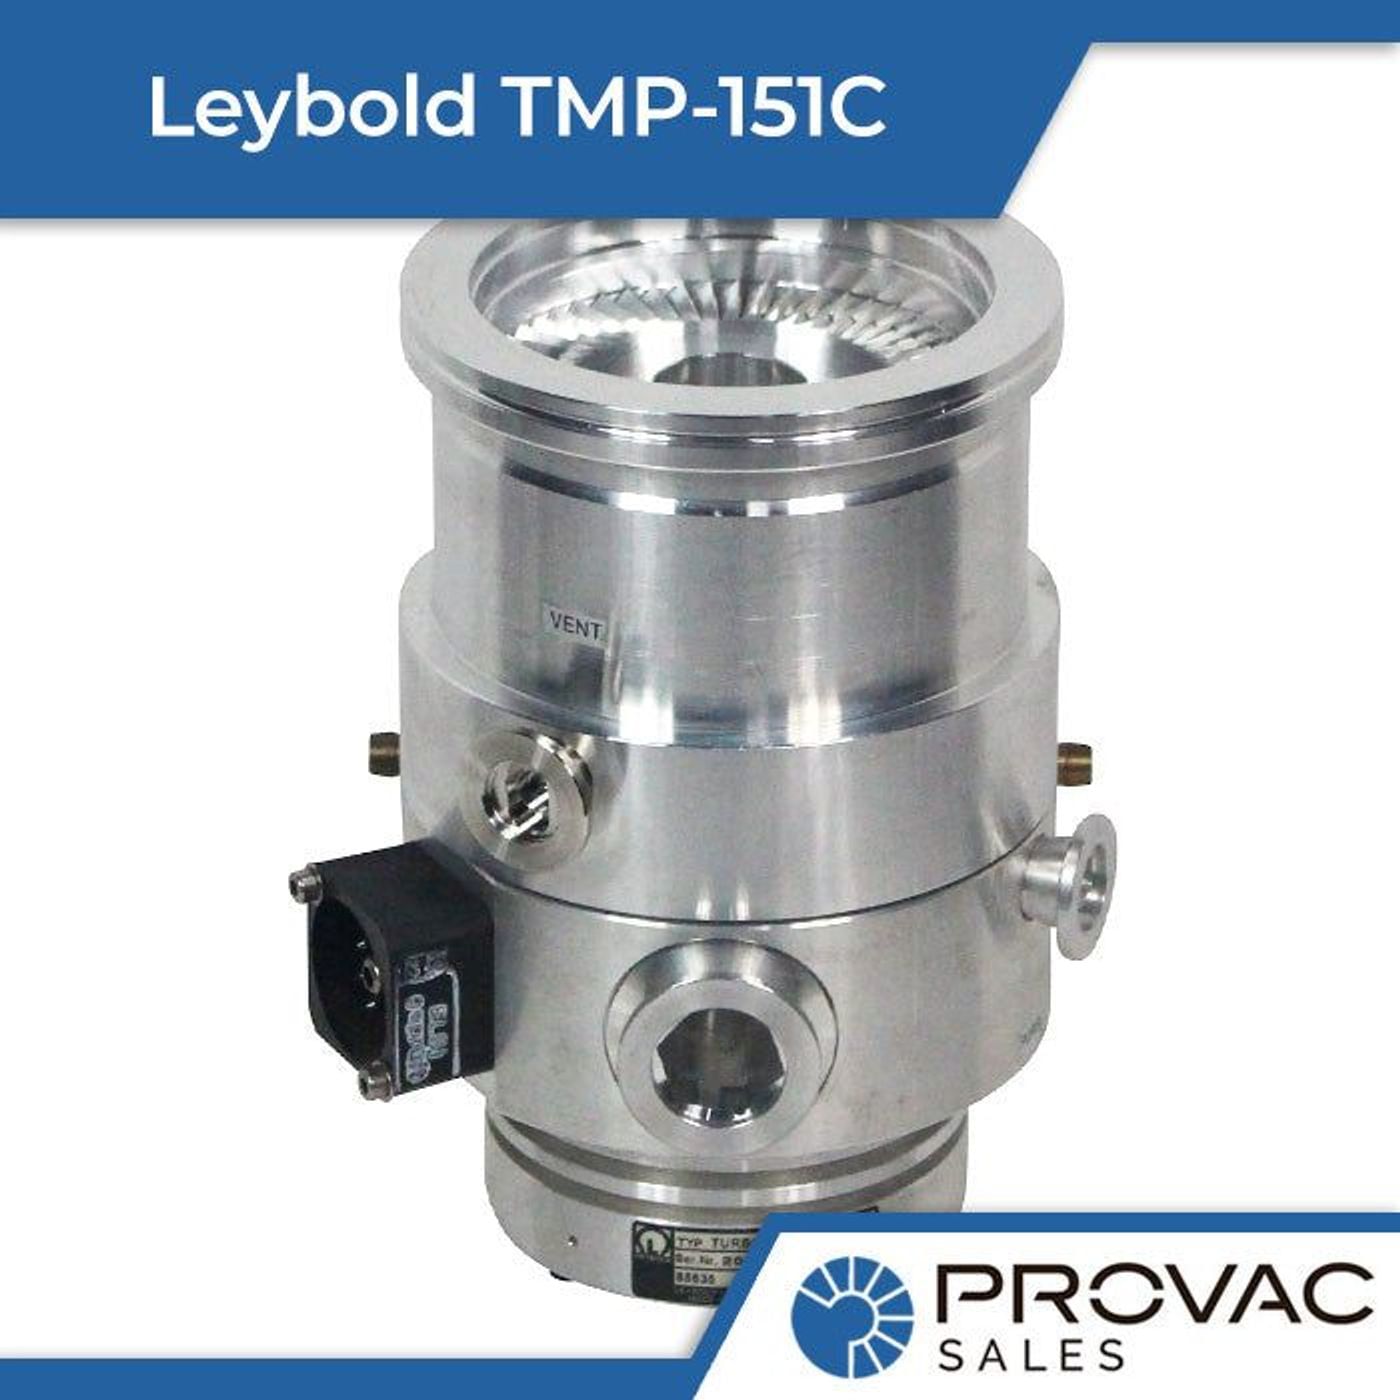 Leybold TMP-151C Turbomolecular Pump